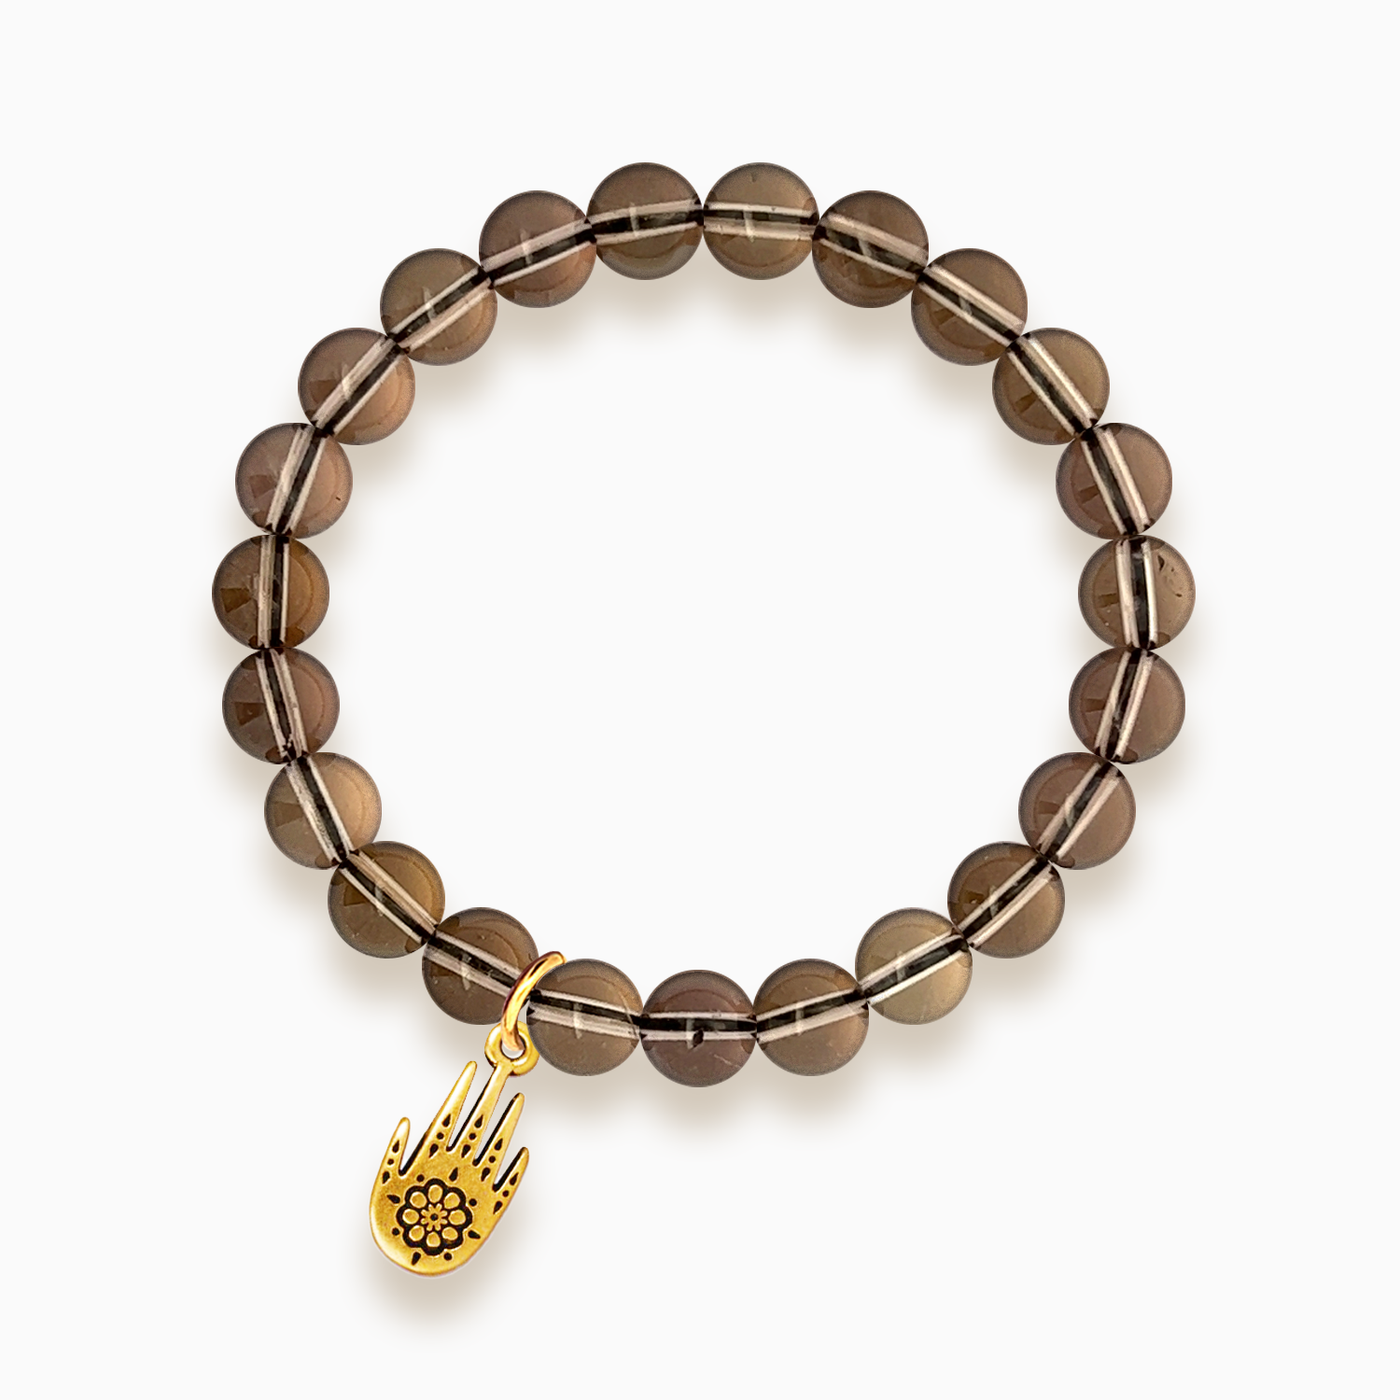 Gemstone Stacker Bracelet With Gold Plated Hamsa Hand Charm